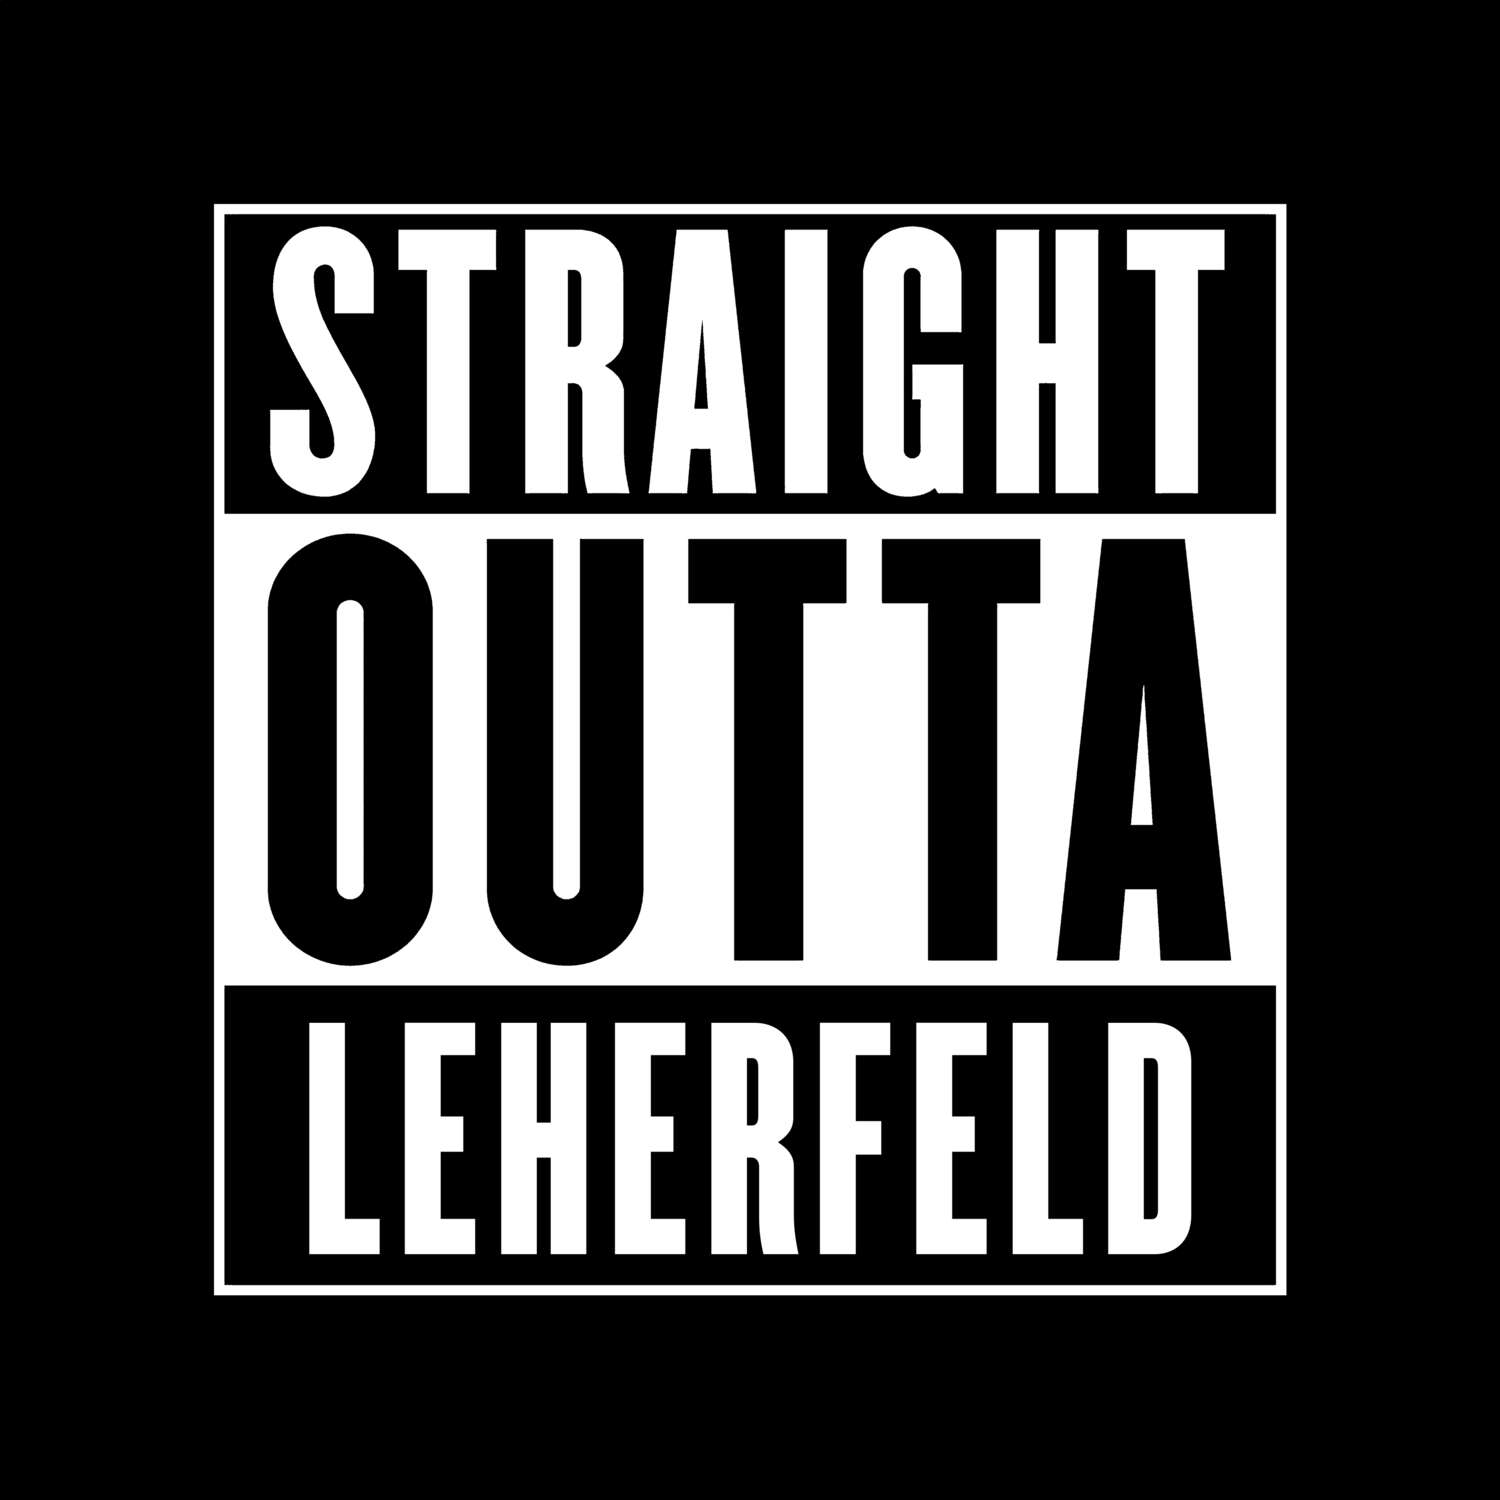 Leherfeld T-Shirt »Straight Outta«